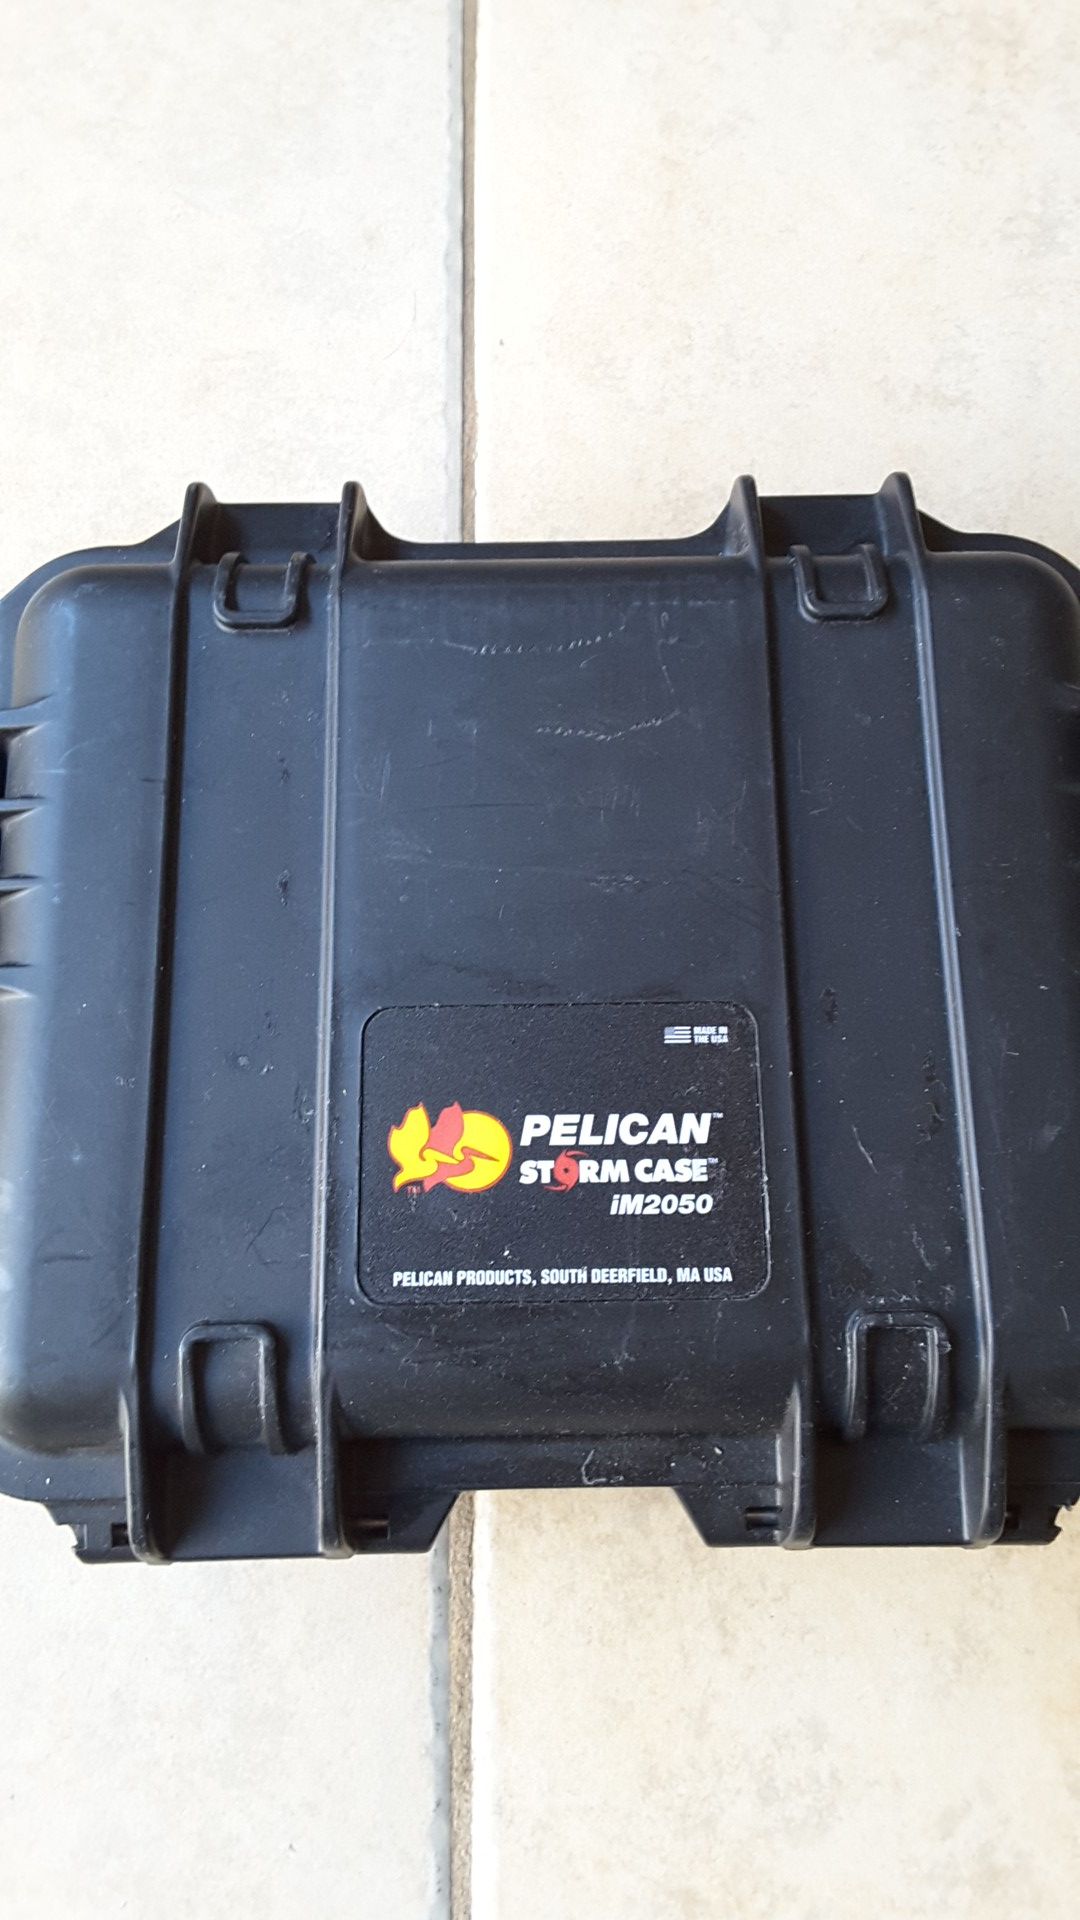 Pelican case